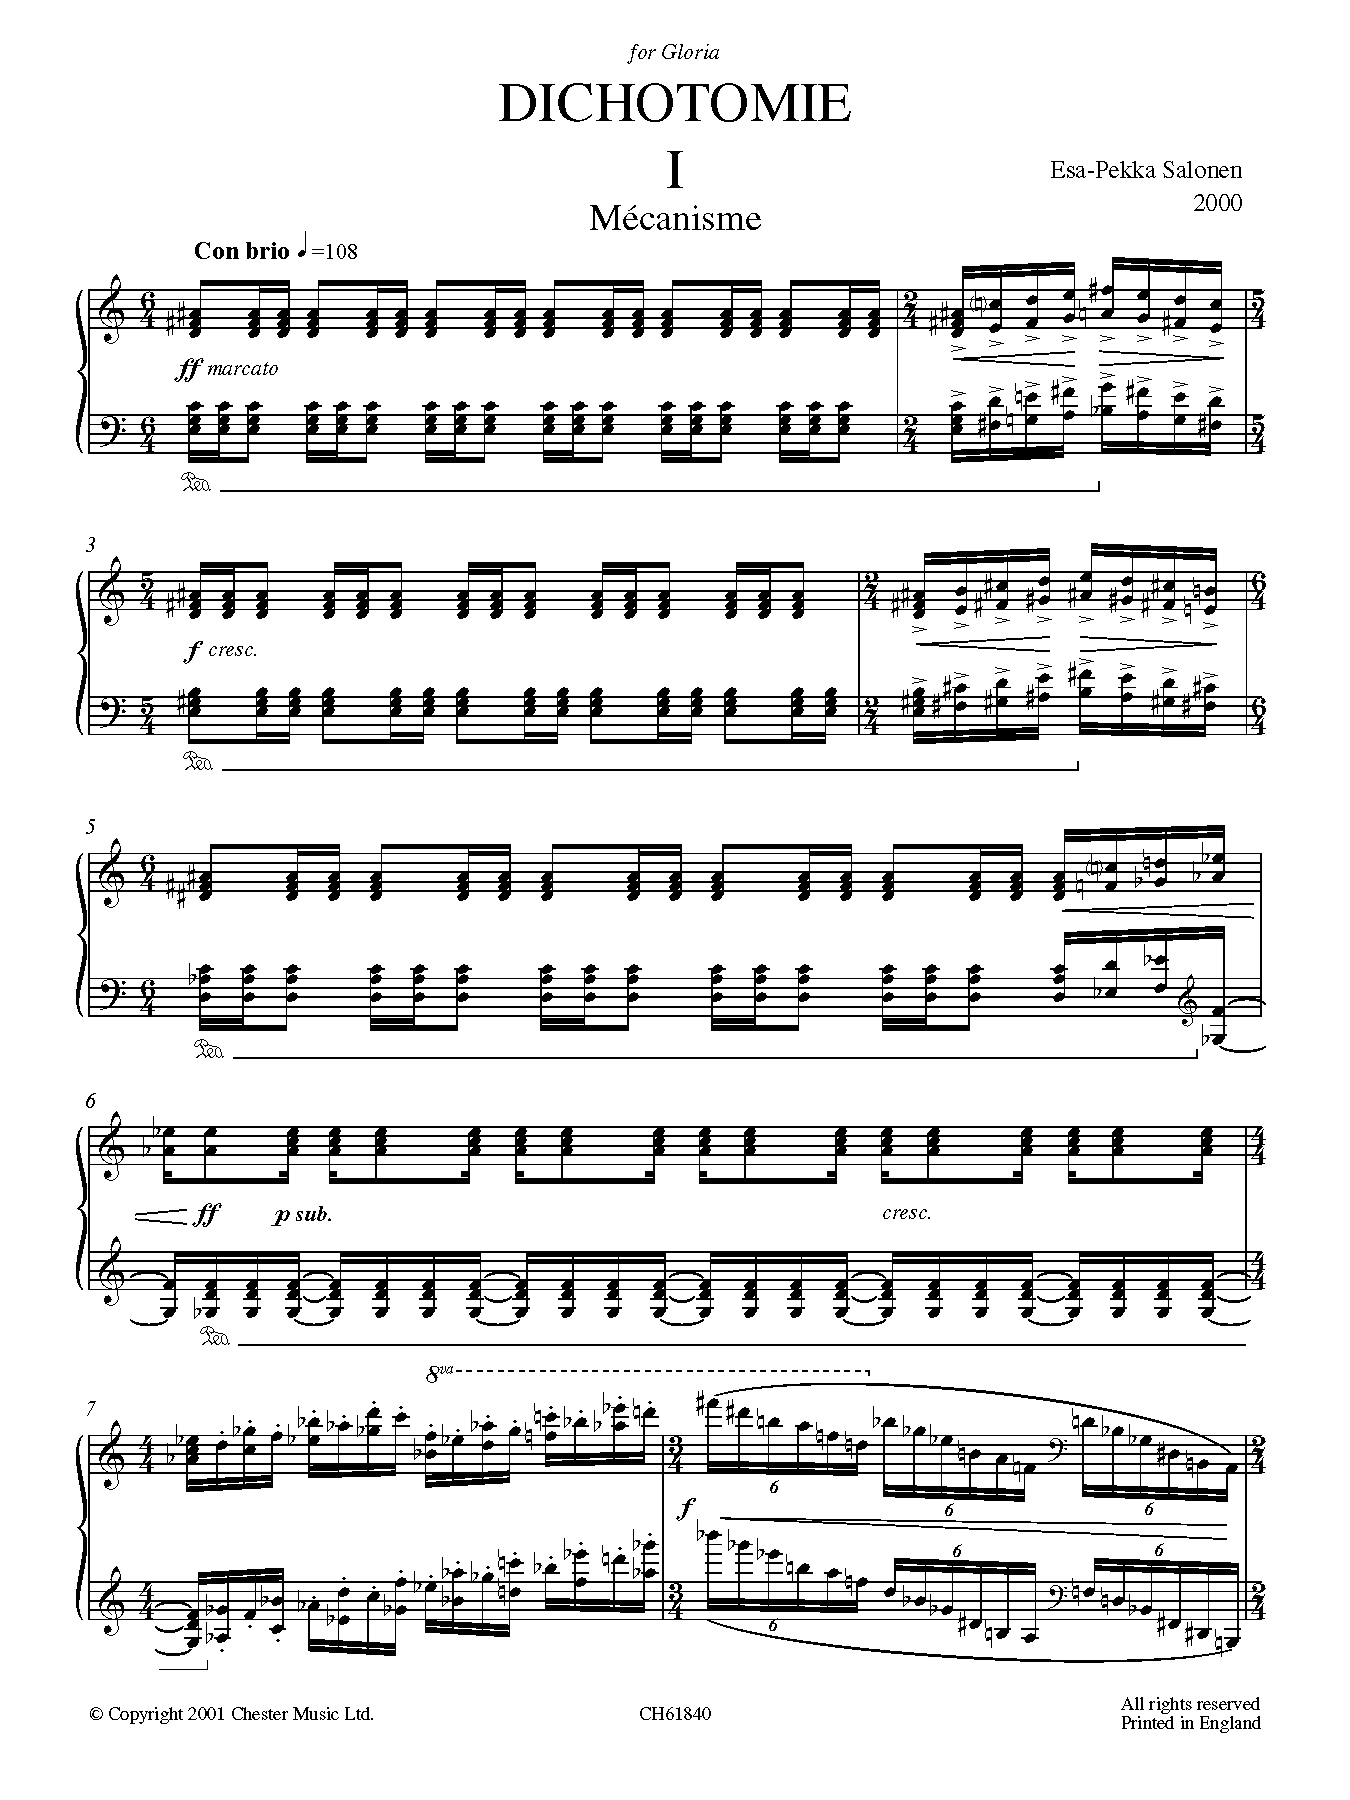 Dichotomie I - Mchanisme (Piano Solo) von Esa-Pekka Salonen